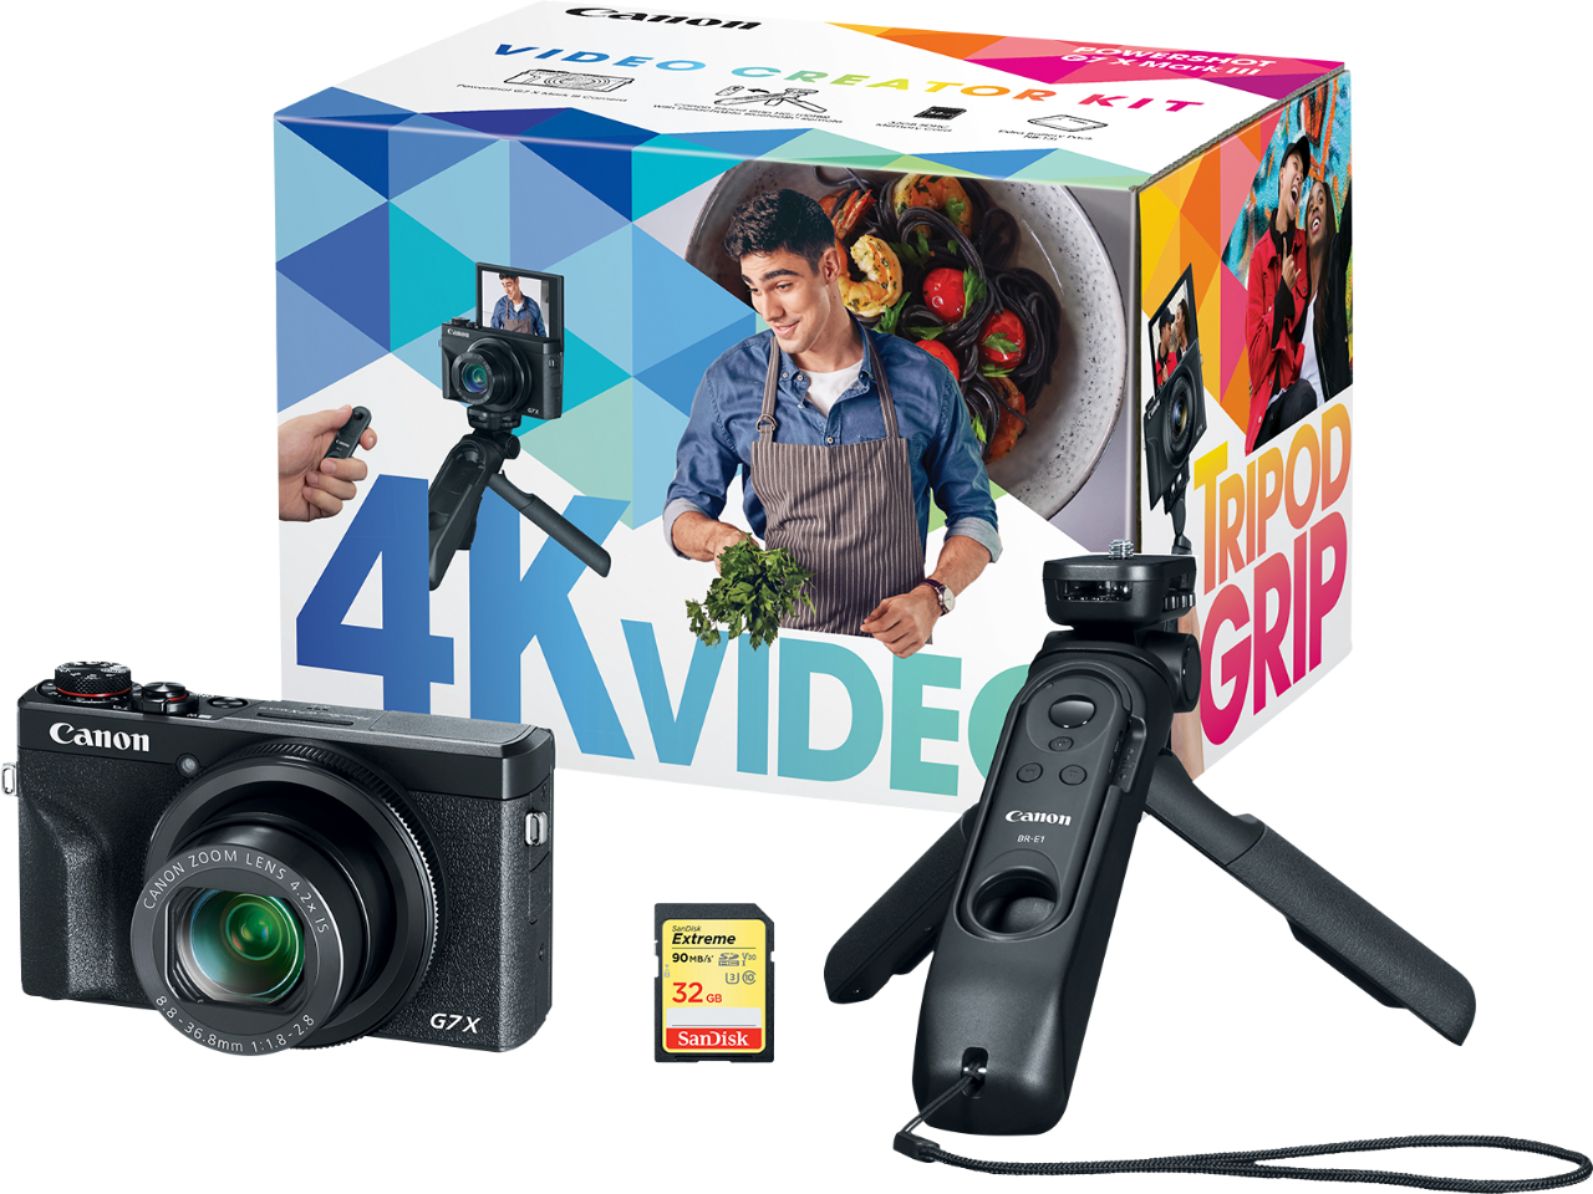 Canon PowerShot G7 X Mark III 20.1-Megapixel Digital Camera Video